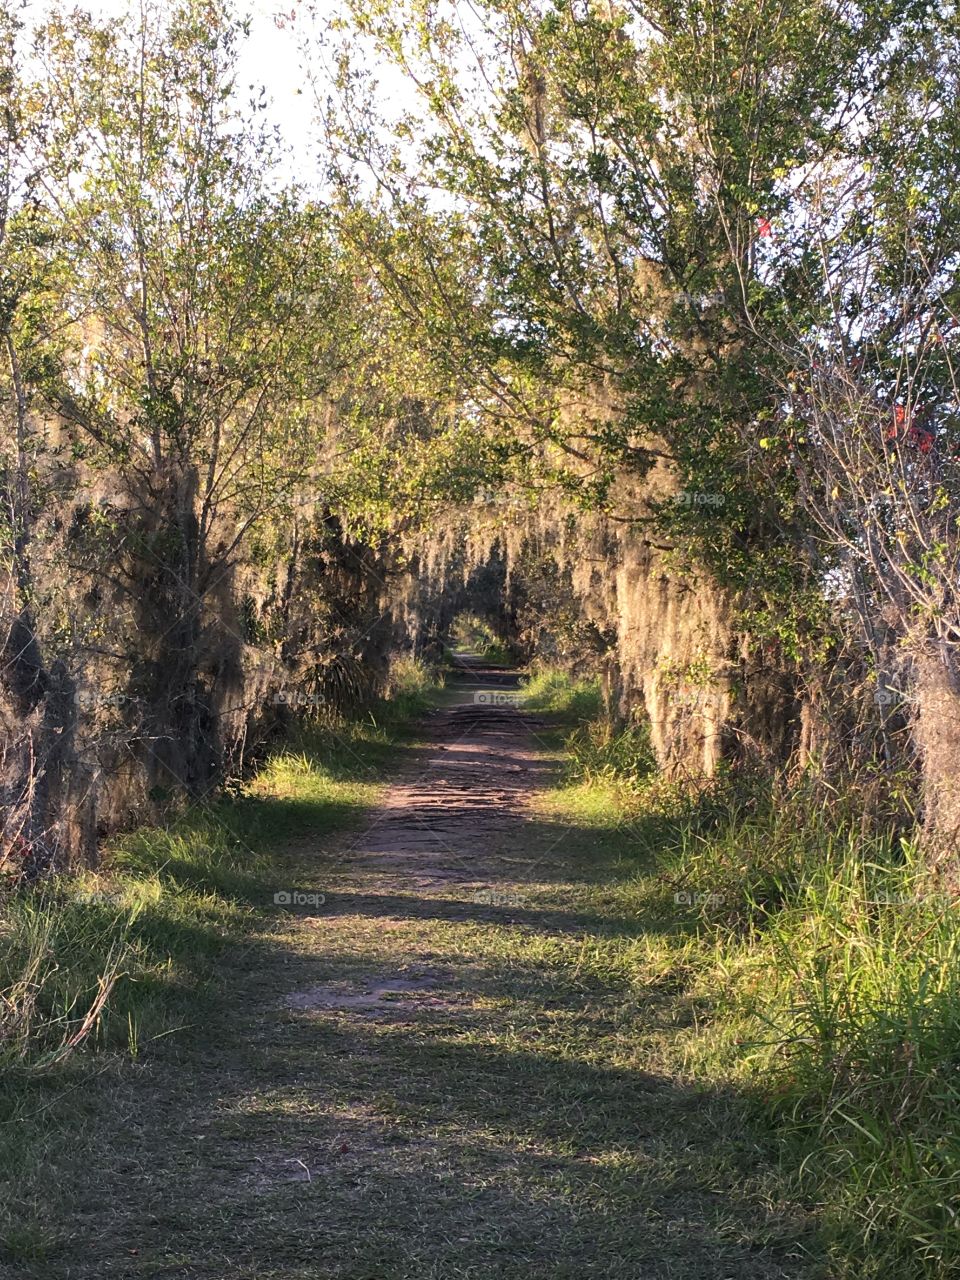 Tree lined walking path